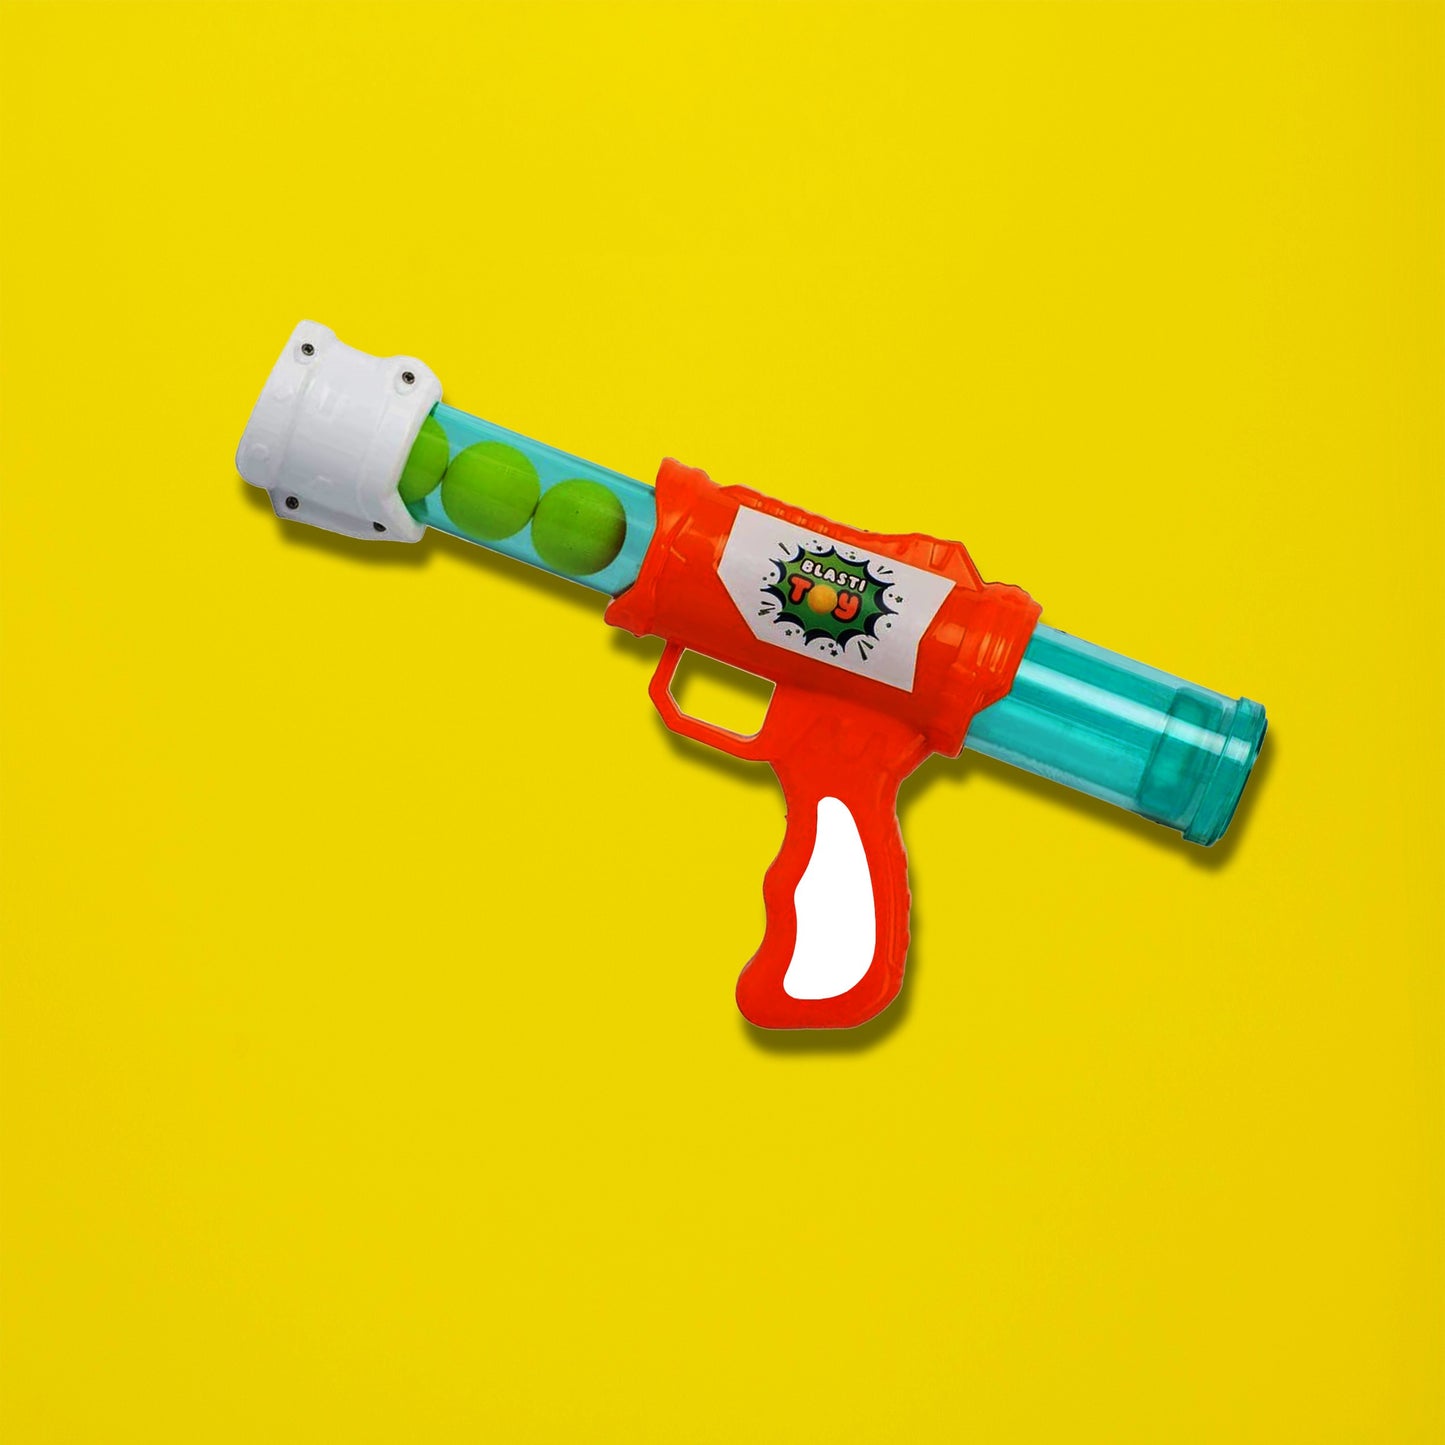 Blast Shooting Gun with 5 Foam Balls Toy